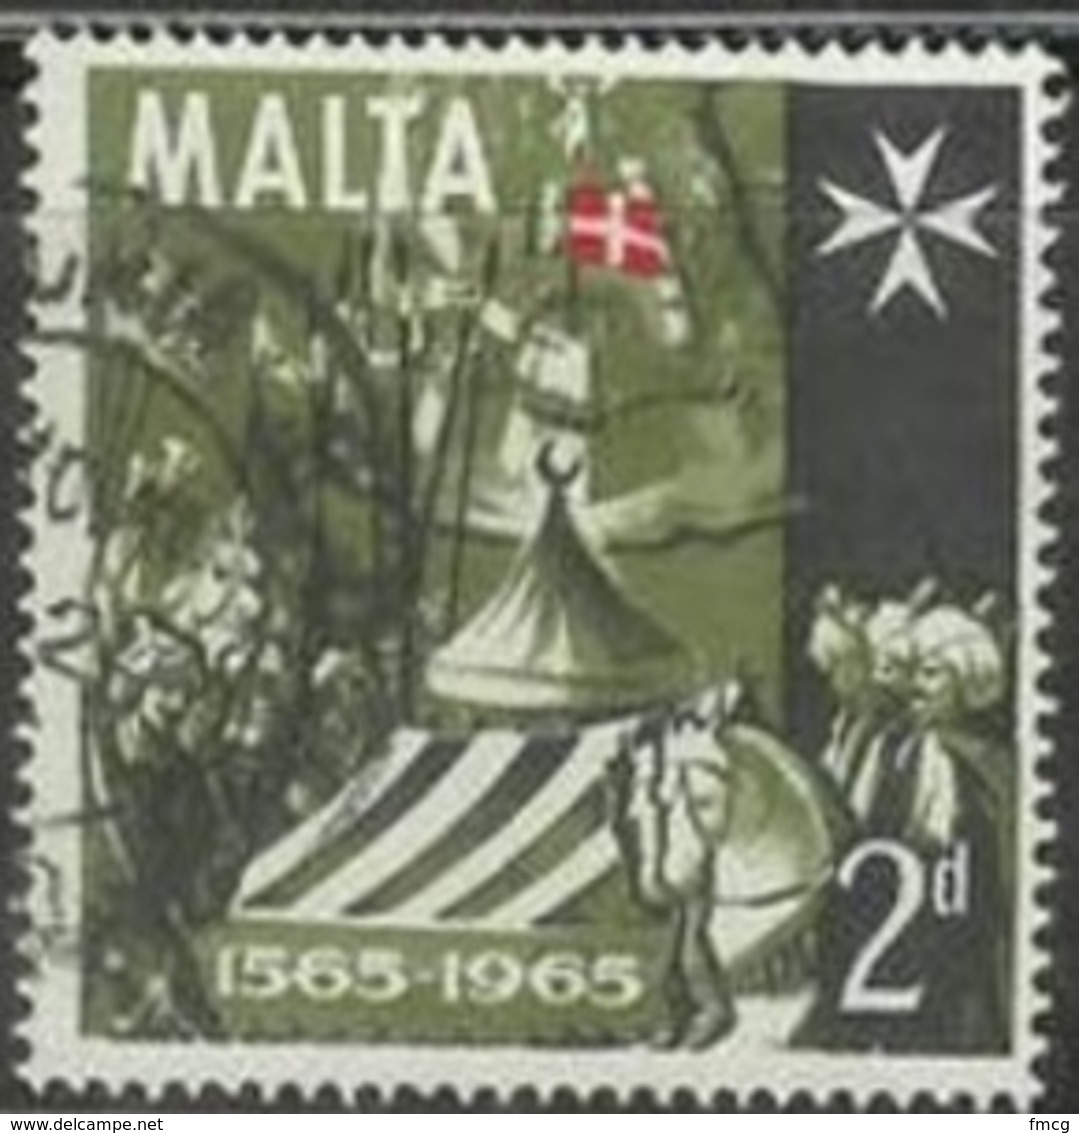 1966 Great Siege, Turkish Camp, Used - Malta